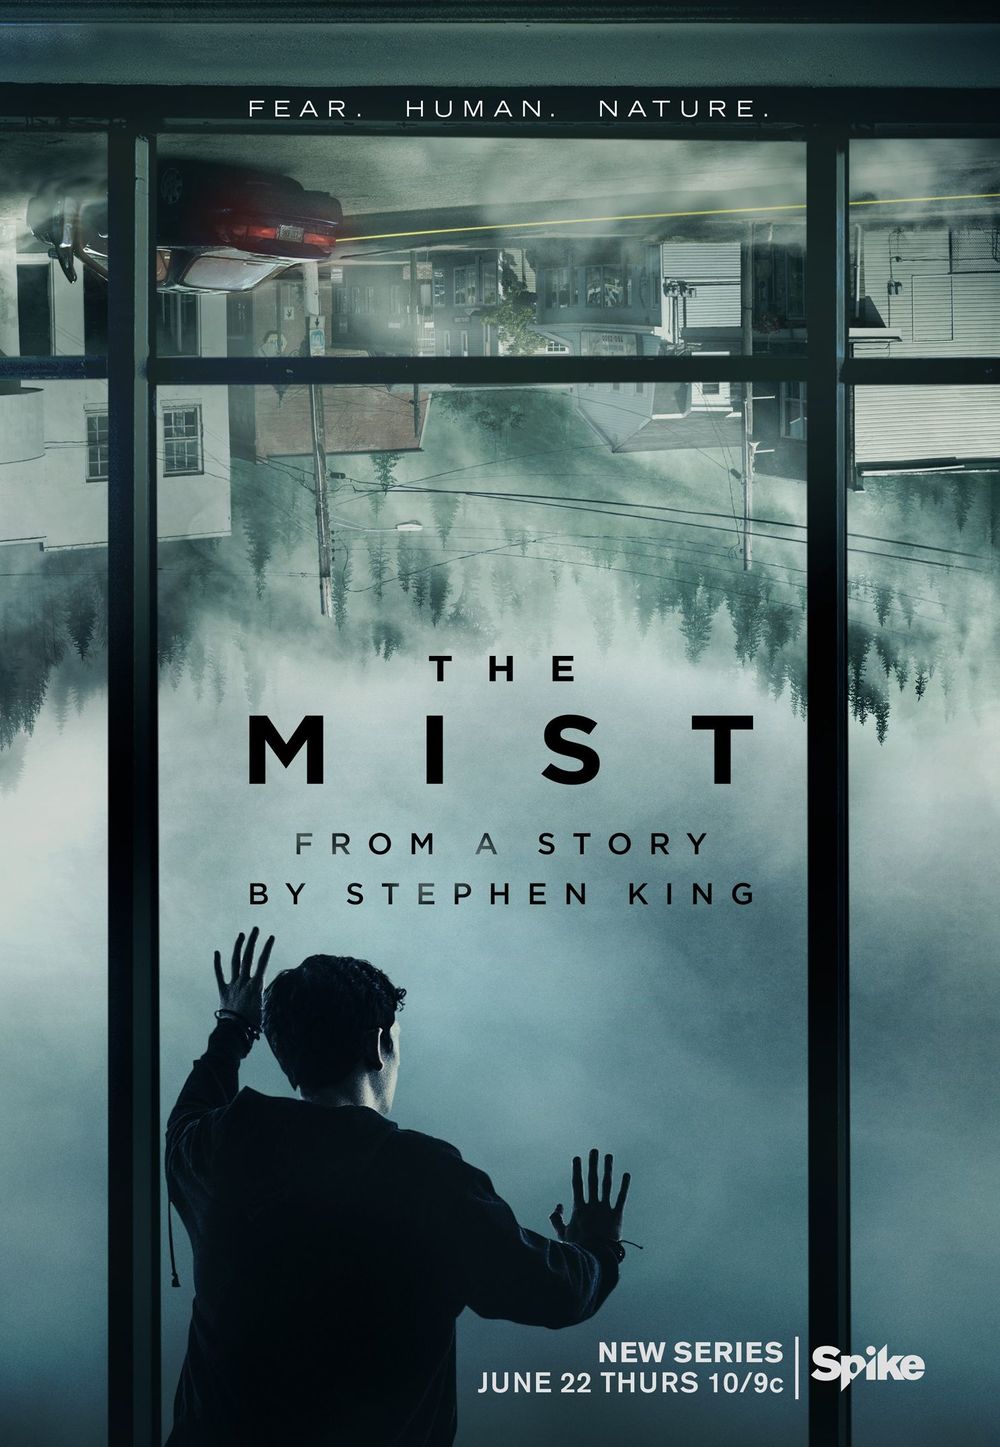 instal the new Rising Mist